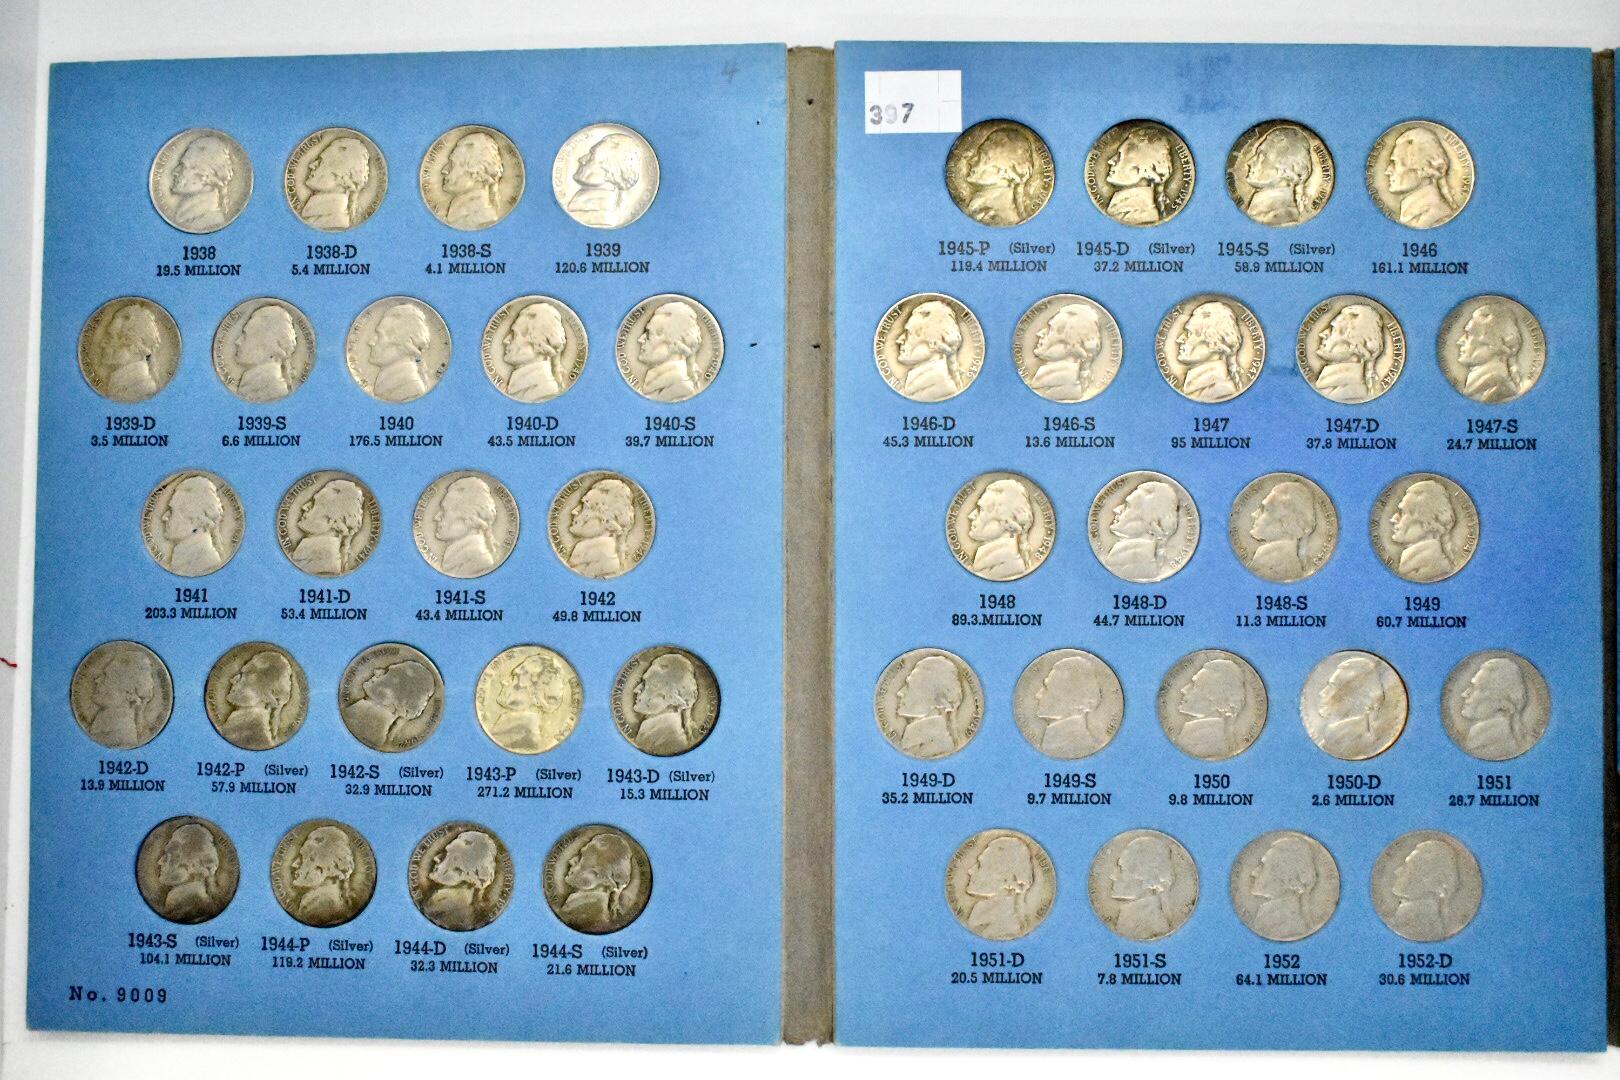 Jefferson Nickels (65 coins),